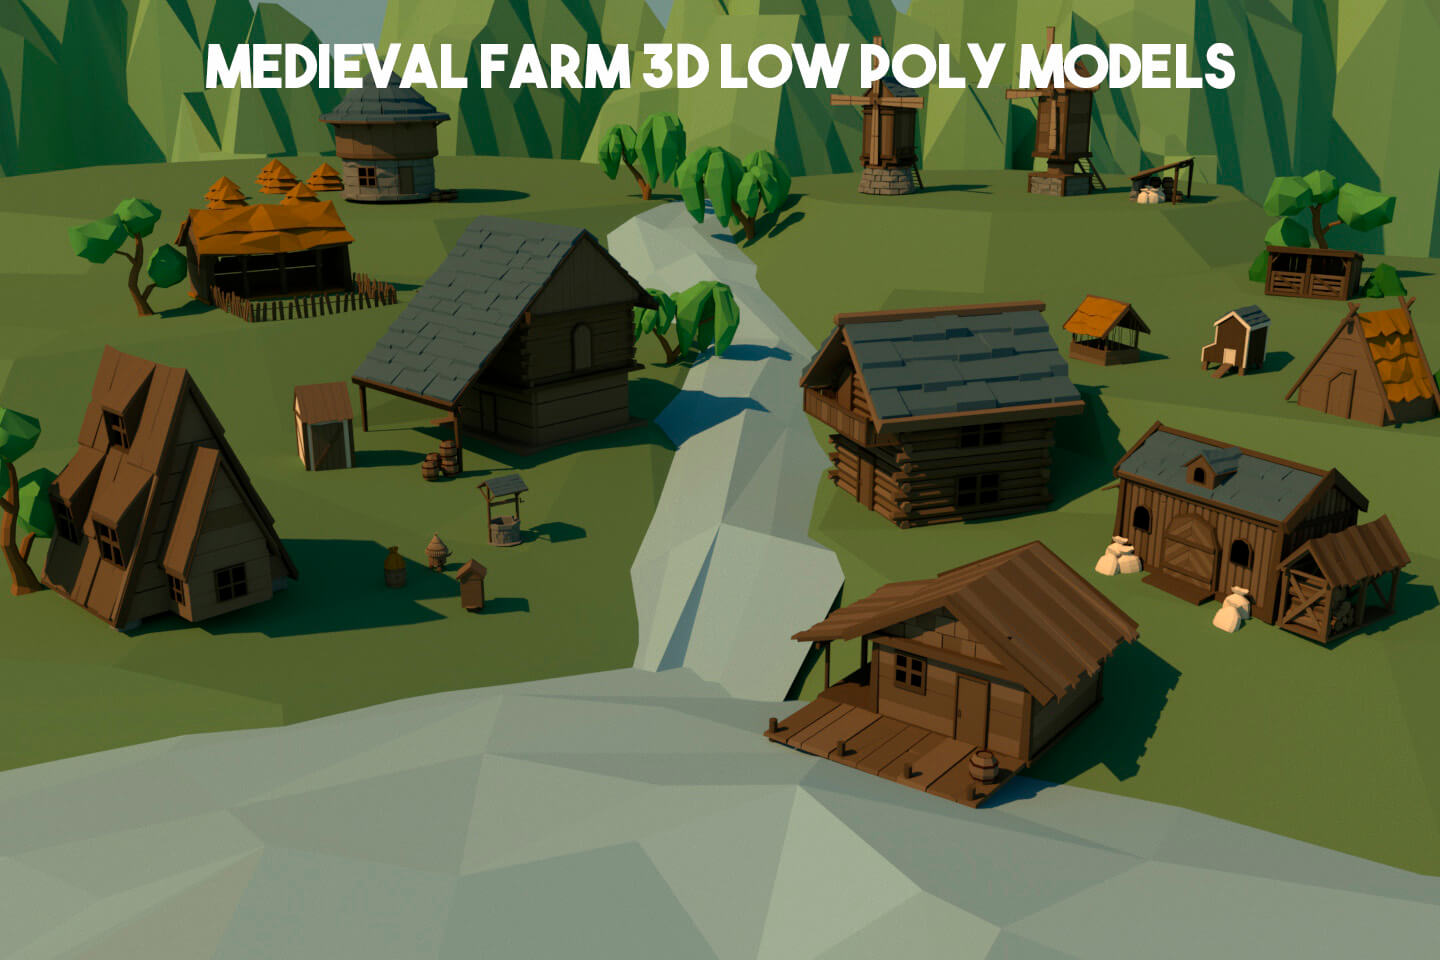 Medieval Farm 3D Low Poly Models - CraftPix.net